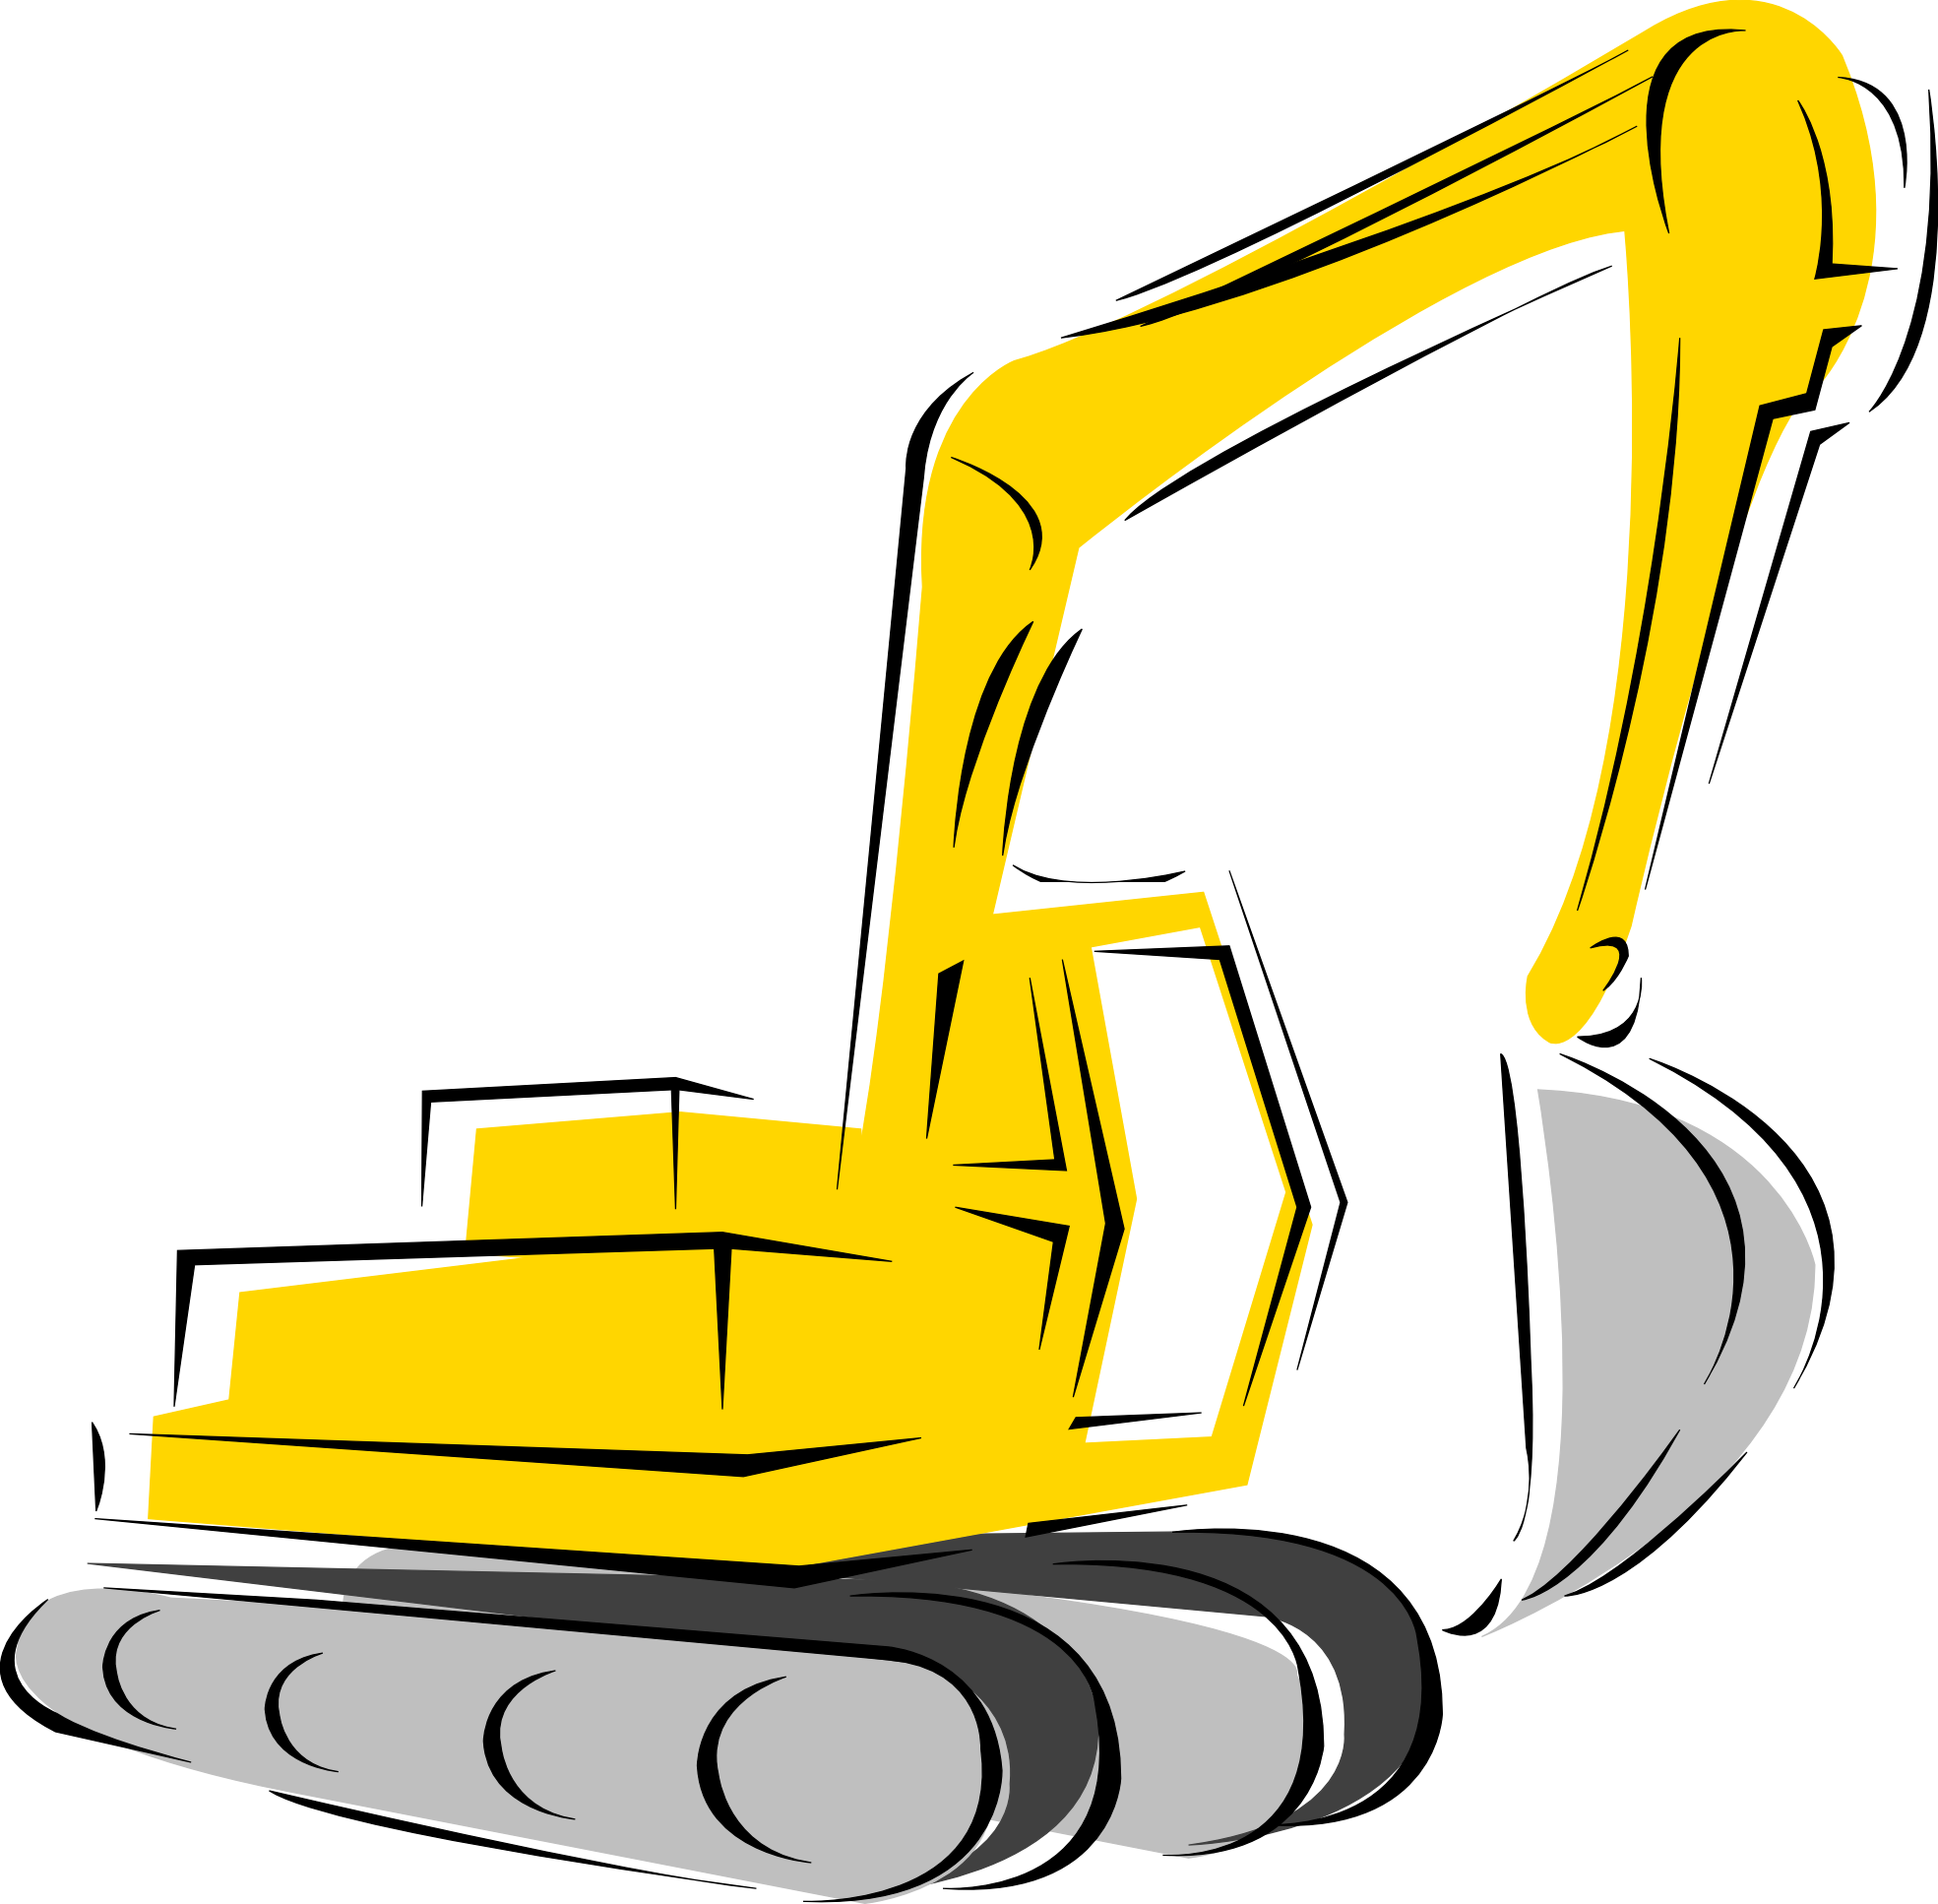 Construction Equipment Clipart - Tumundografico